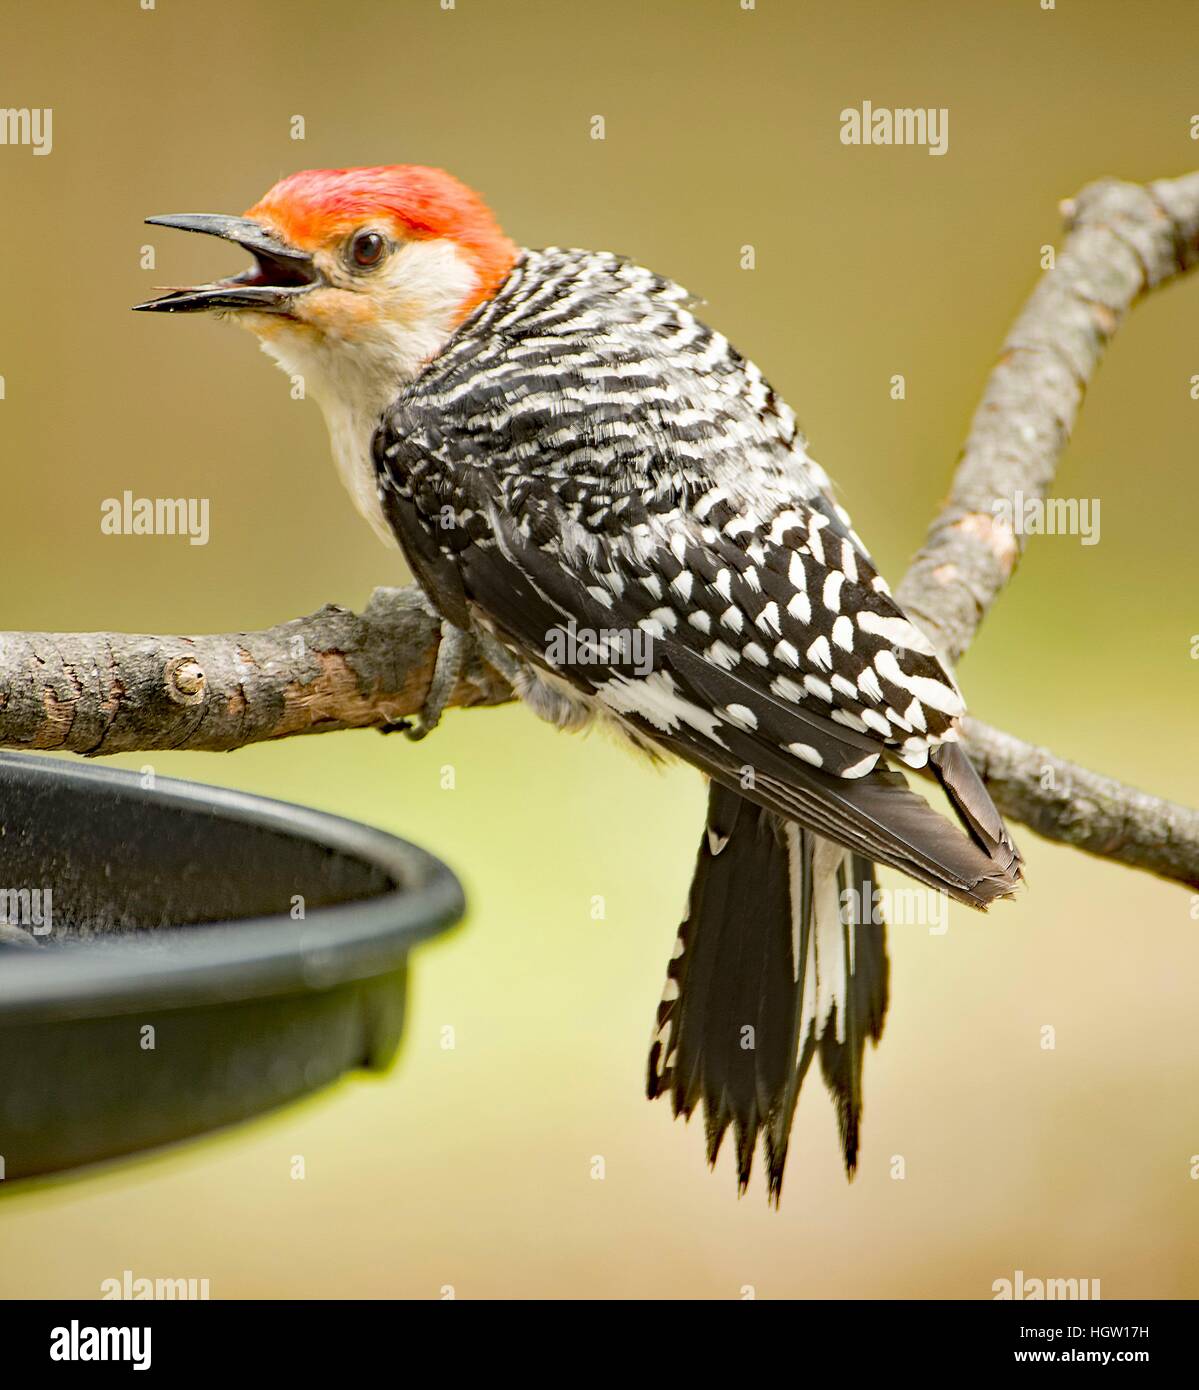 Animal Behavior, Red-bellied Woodpecker in Aggressive Posture Stock Photo